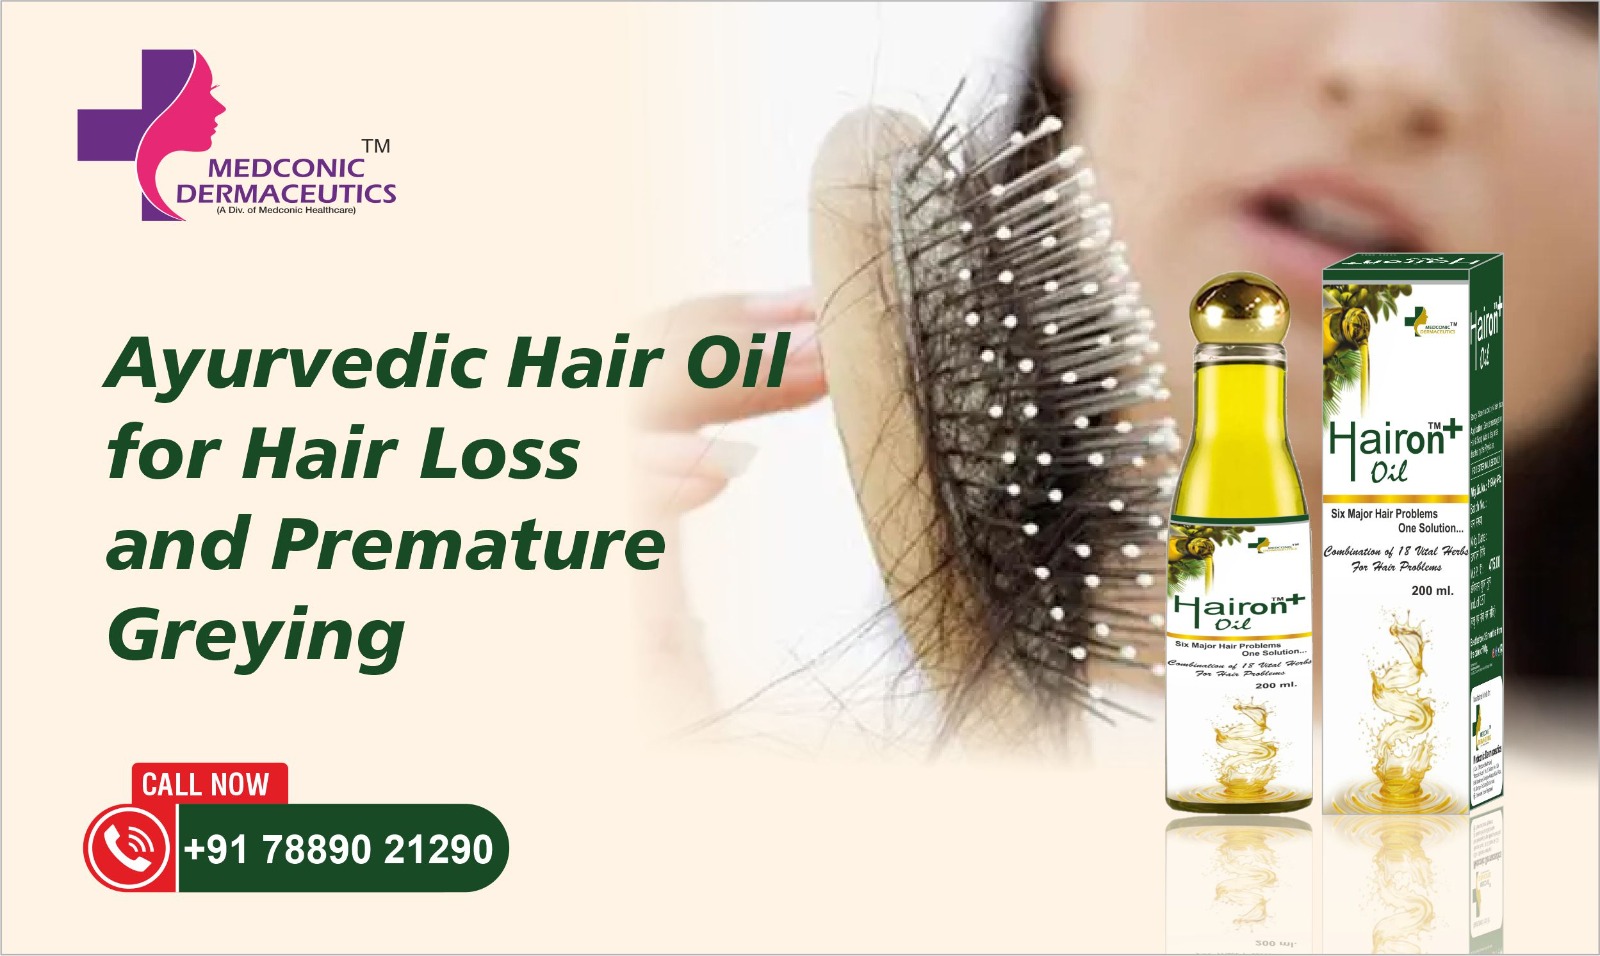 Ayurvedic Hair Oil for Hair Loss and Premature Greying